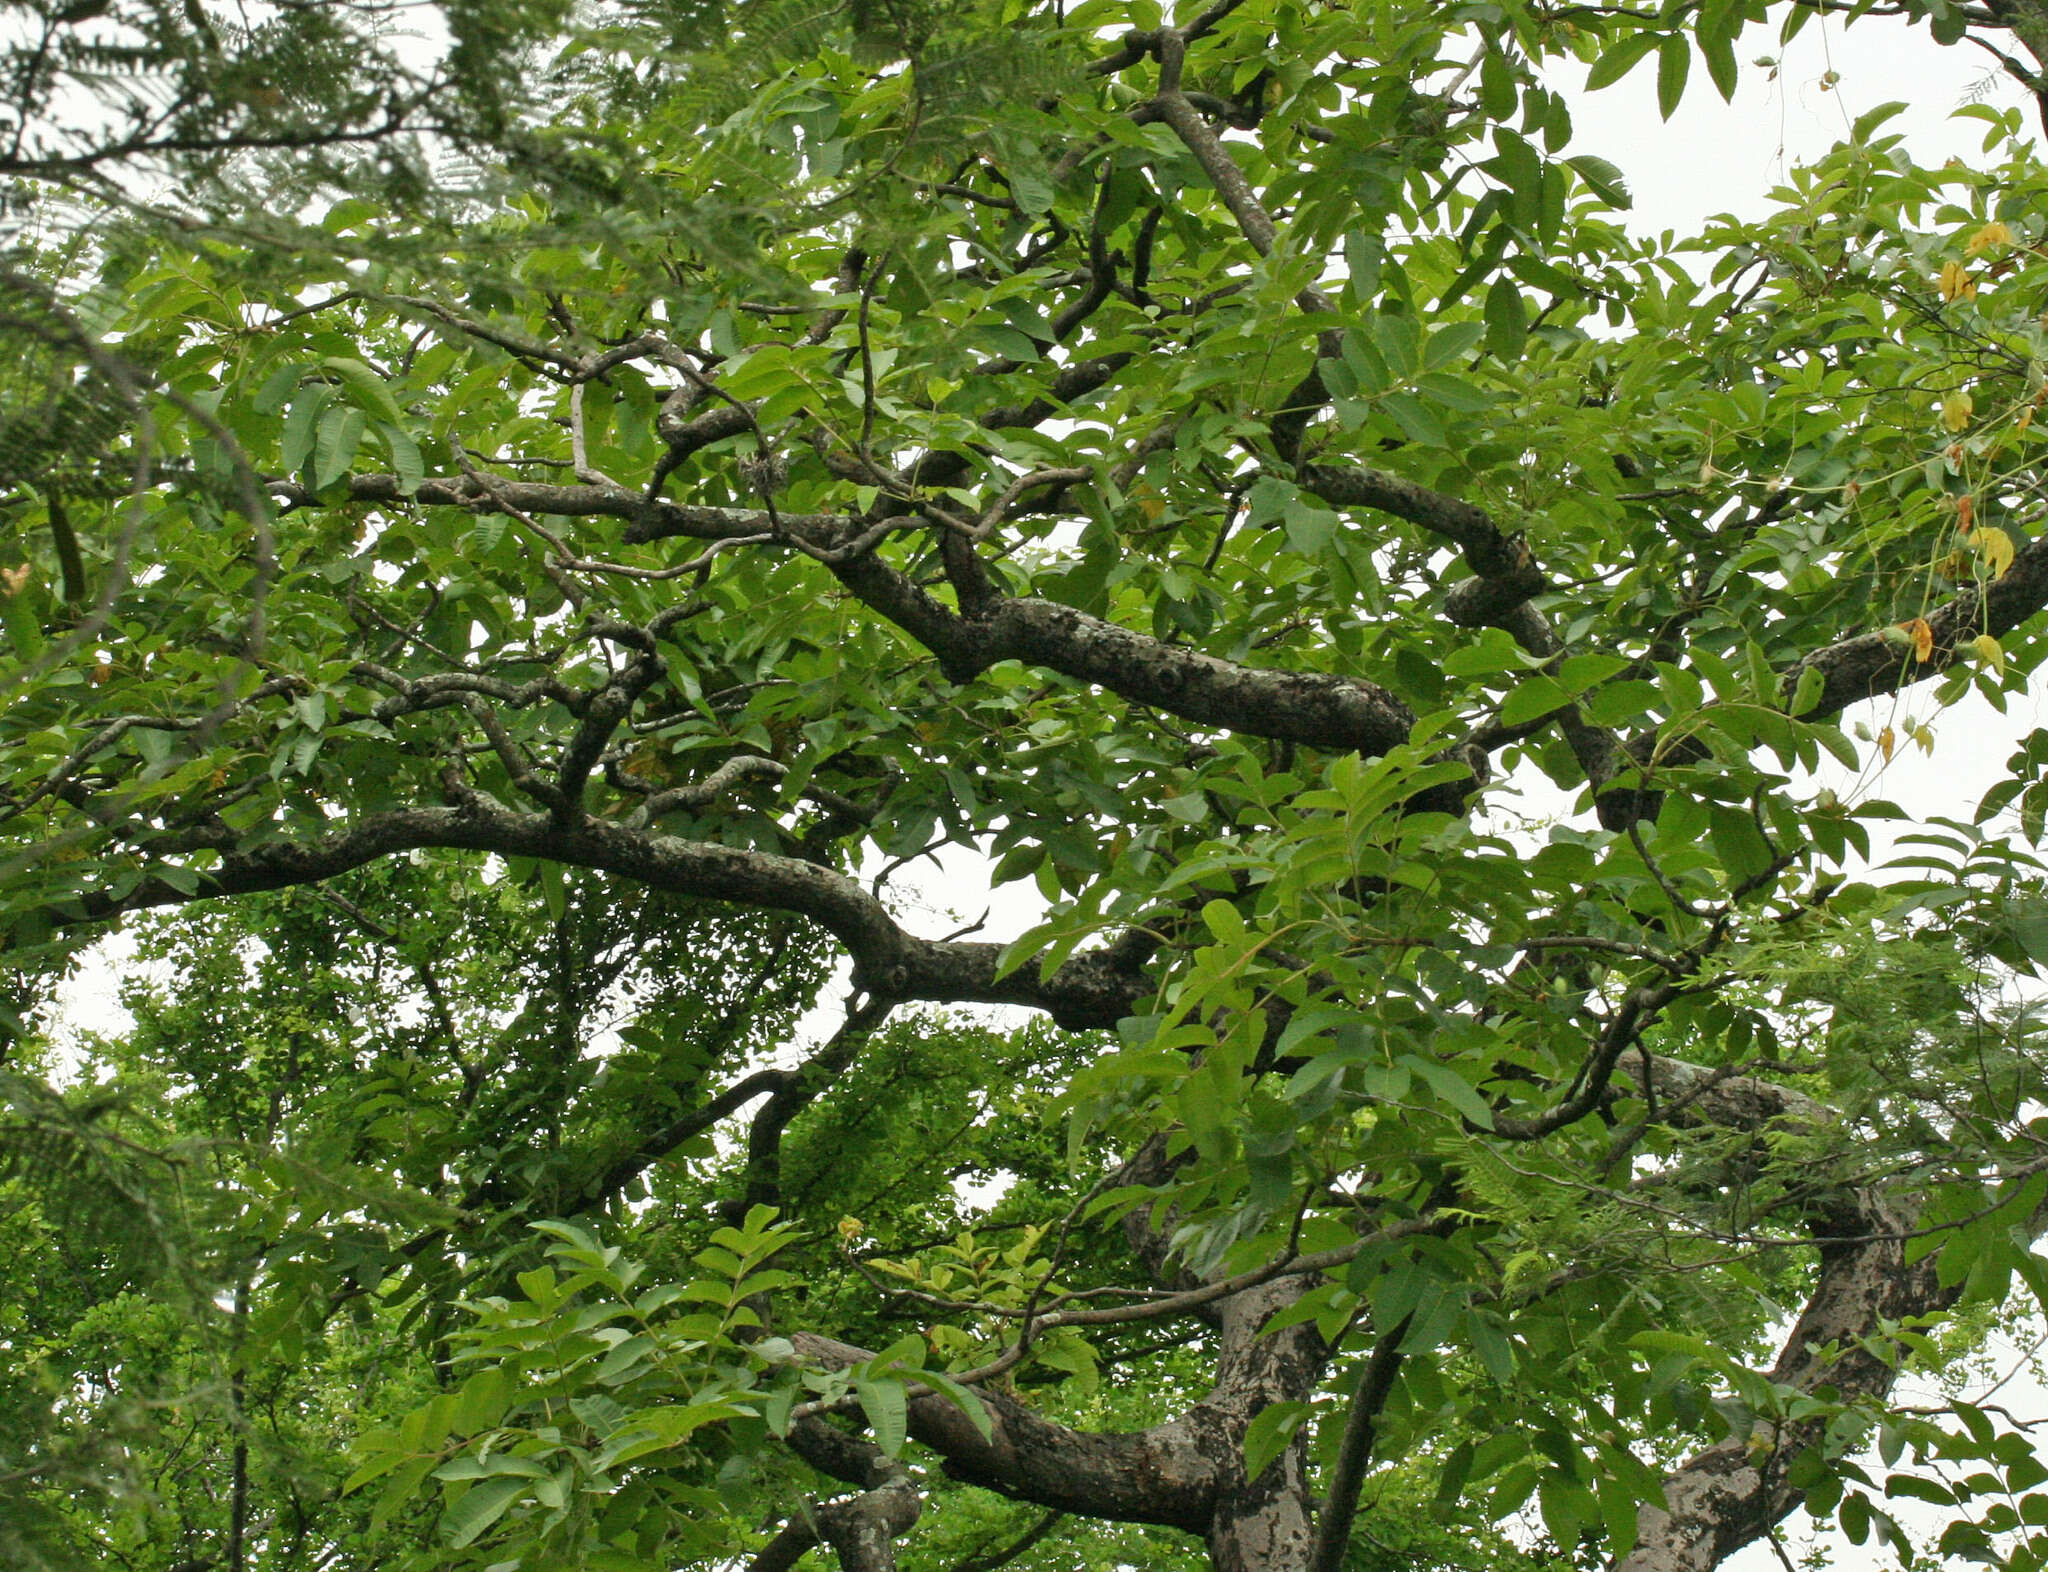 Image of Loxopterygium huasango Spruce ex Engl.